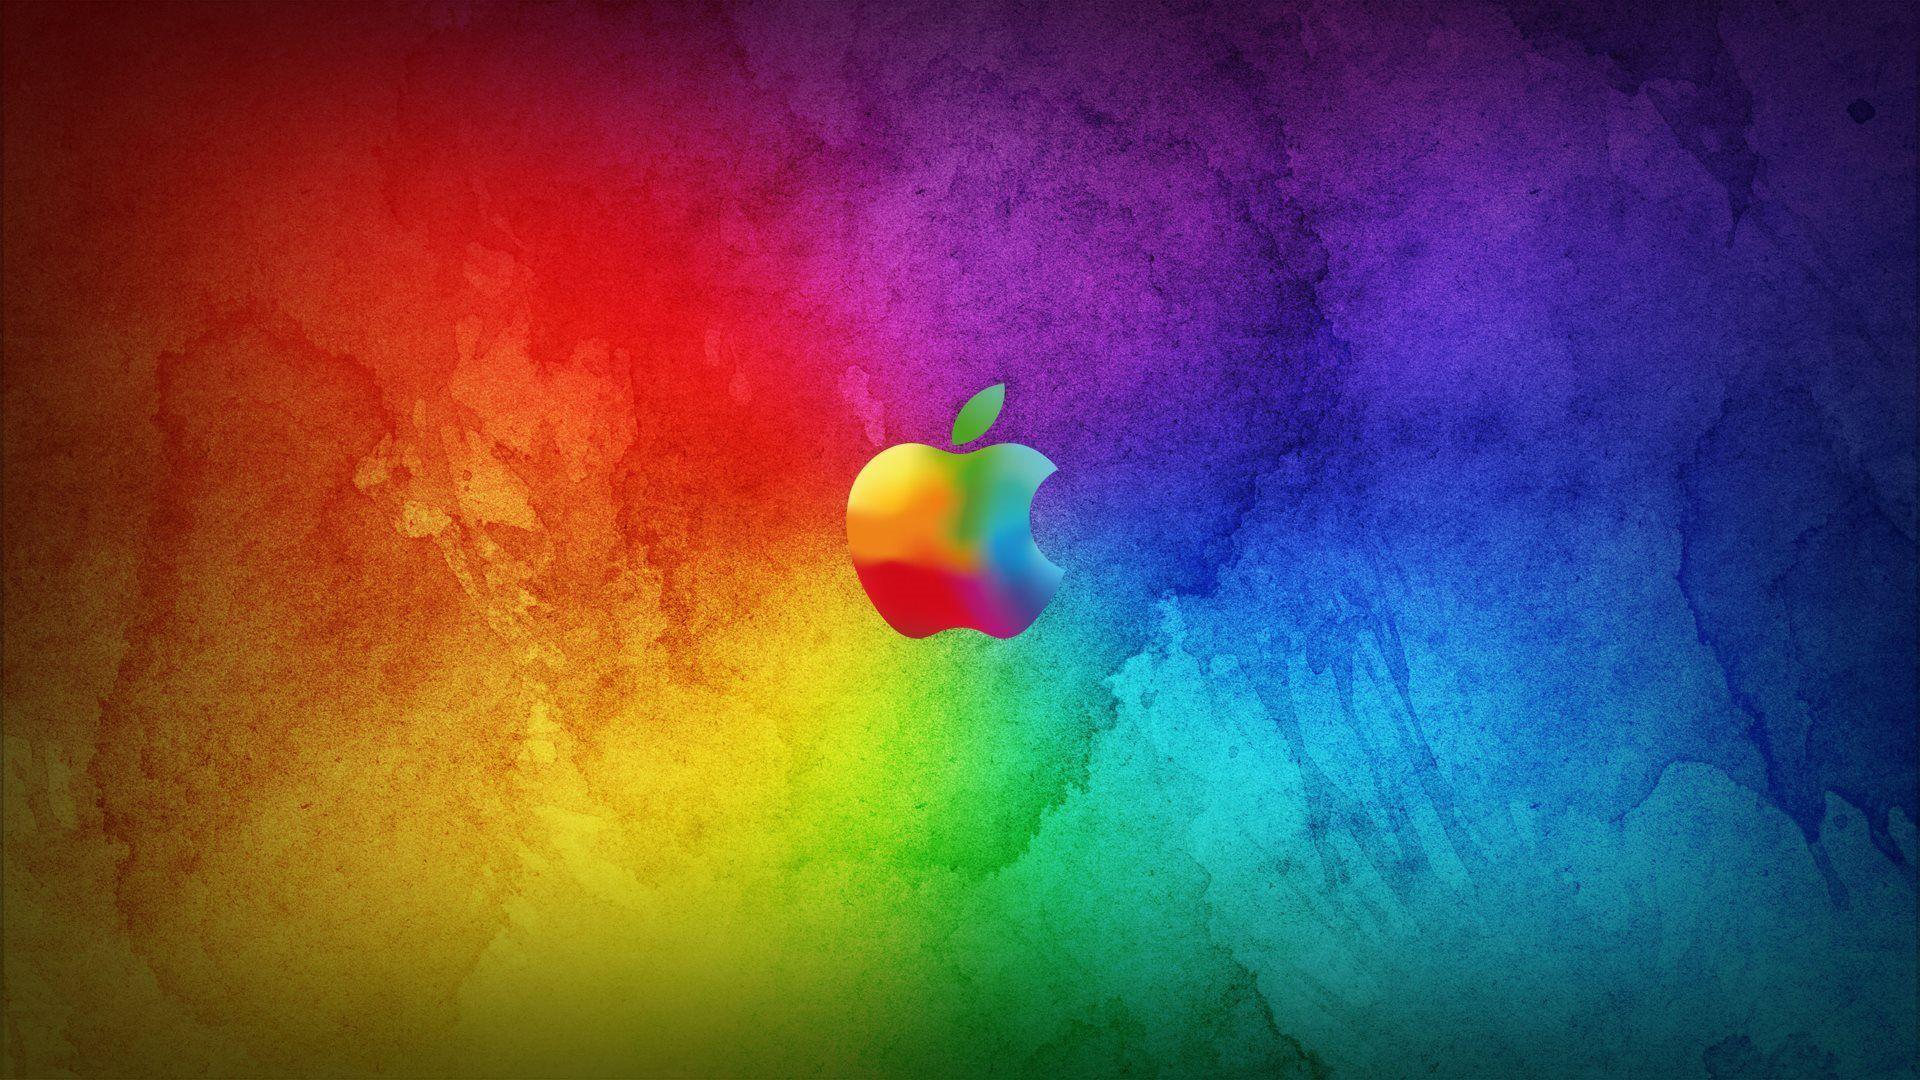 Colourful apple wallpaper. Funny. Apple logo wallpaper